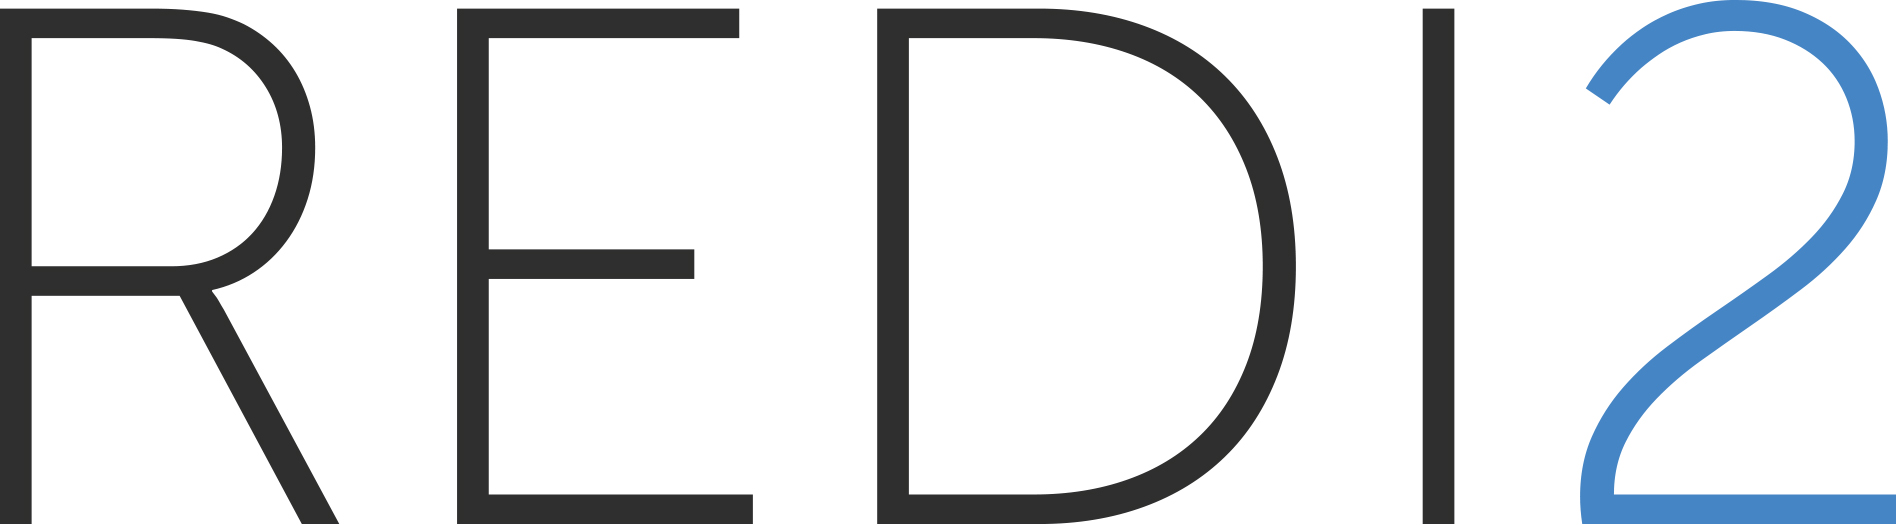 Redi2 Technologies, Inc. logo